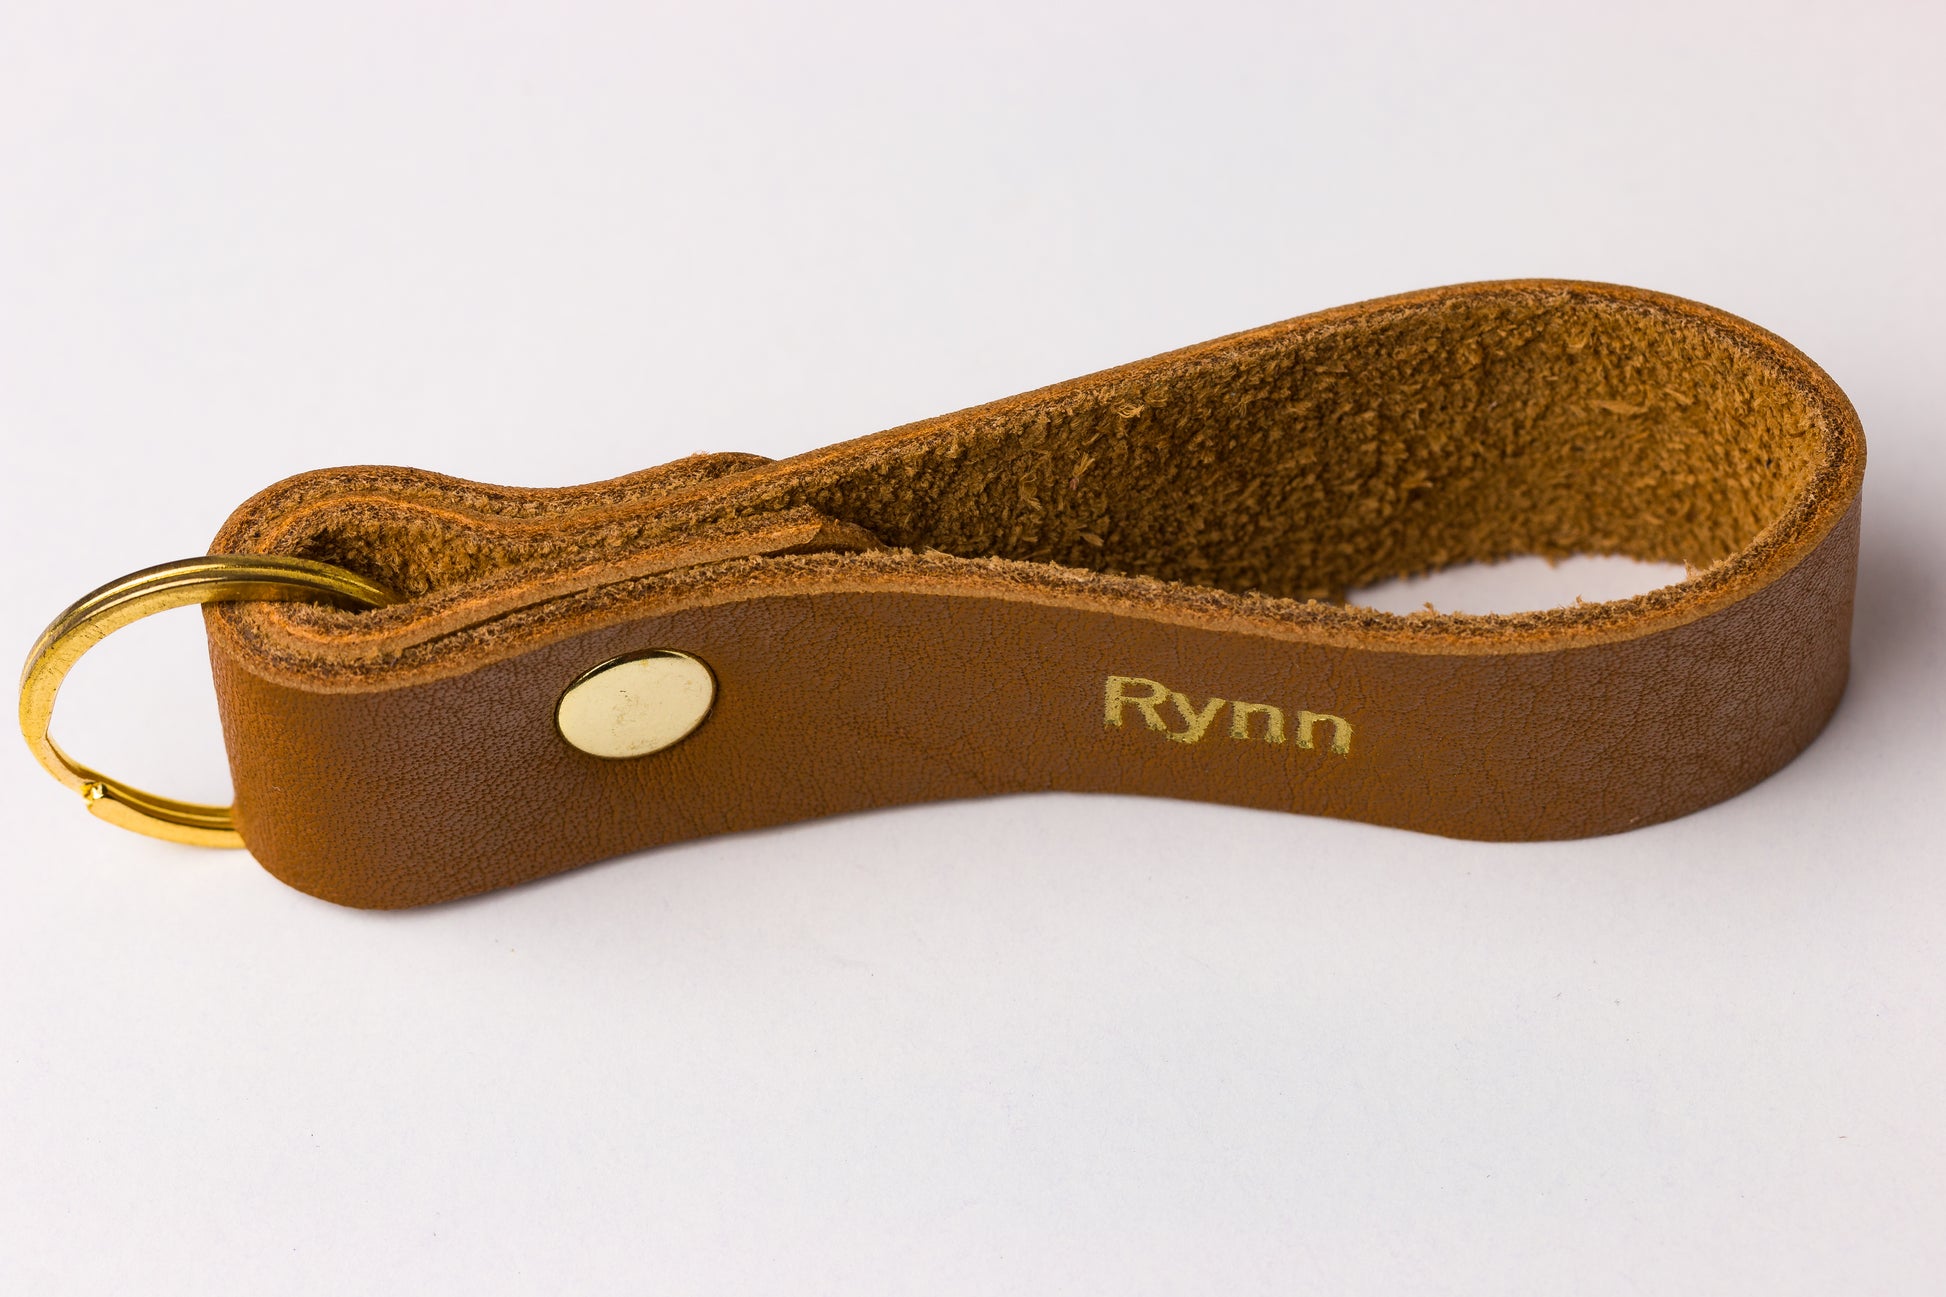  KEYAIIRA - Personalized Leather Lanyard - real leather